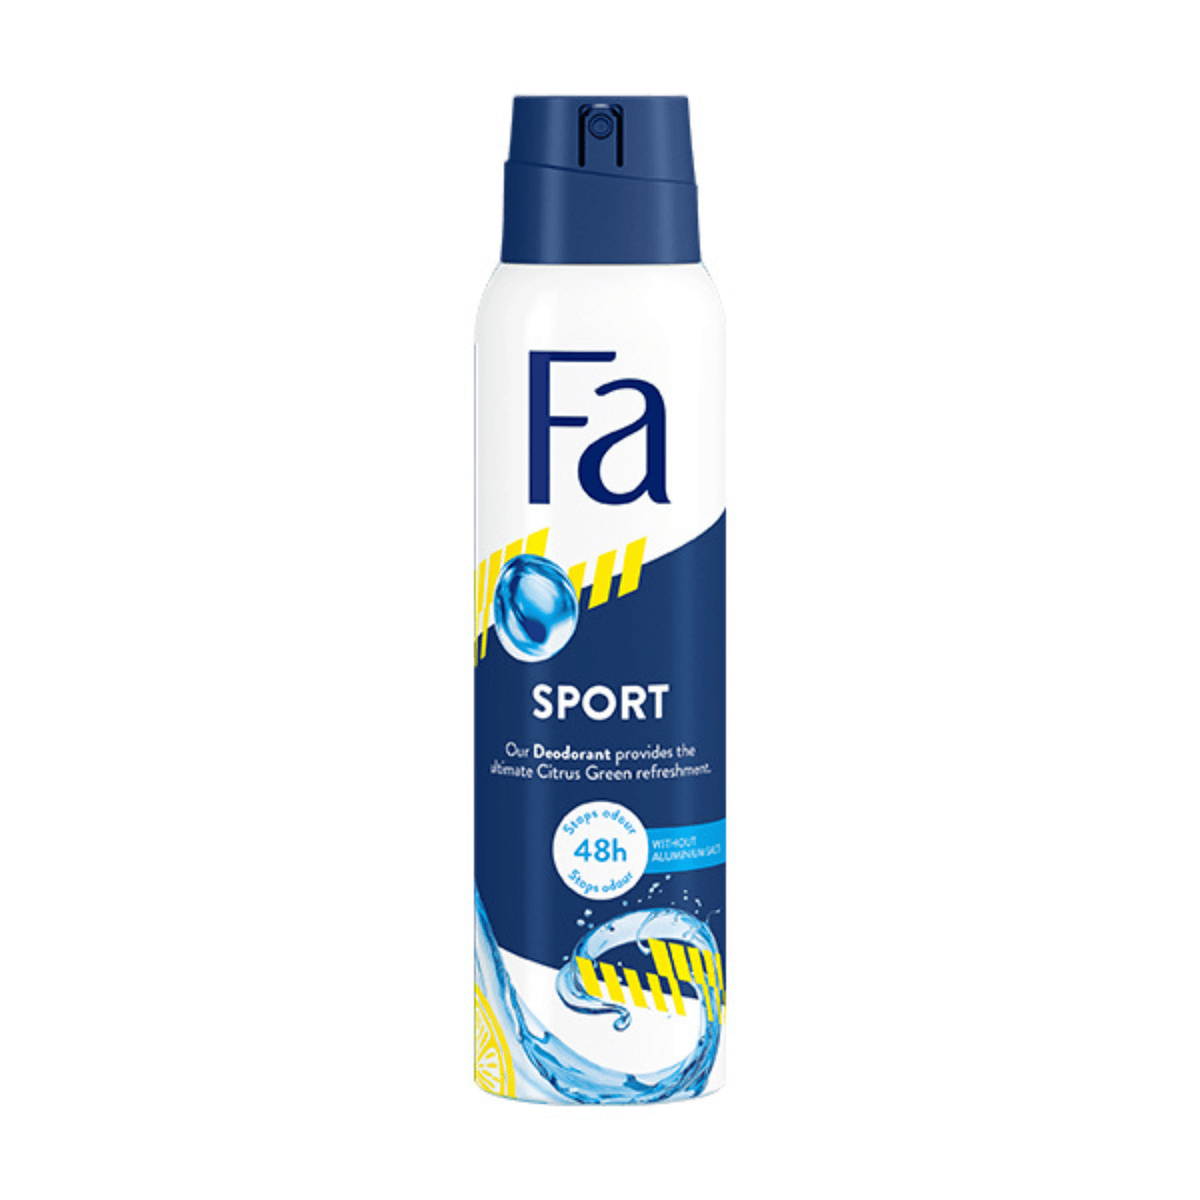 Primary Image of Primary image of Sport Spray Deodorant